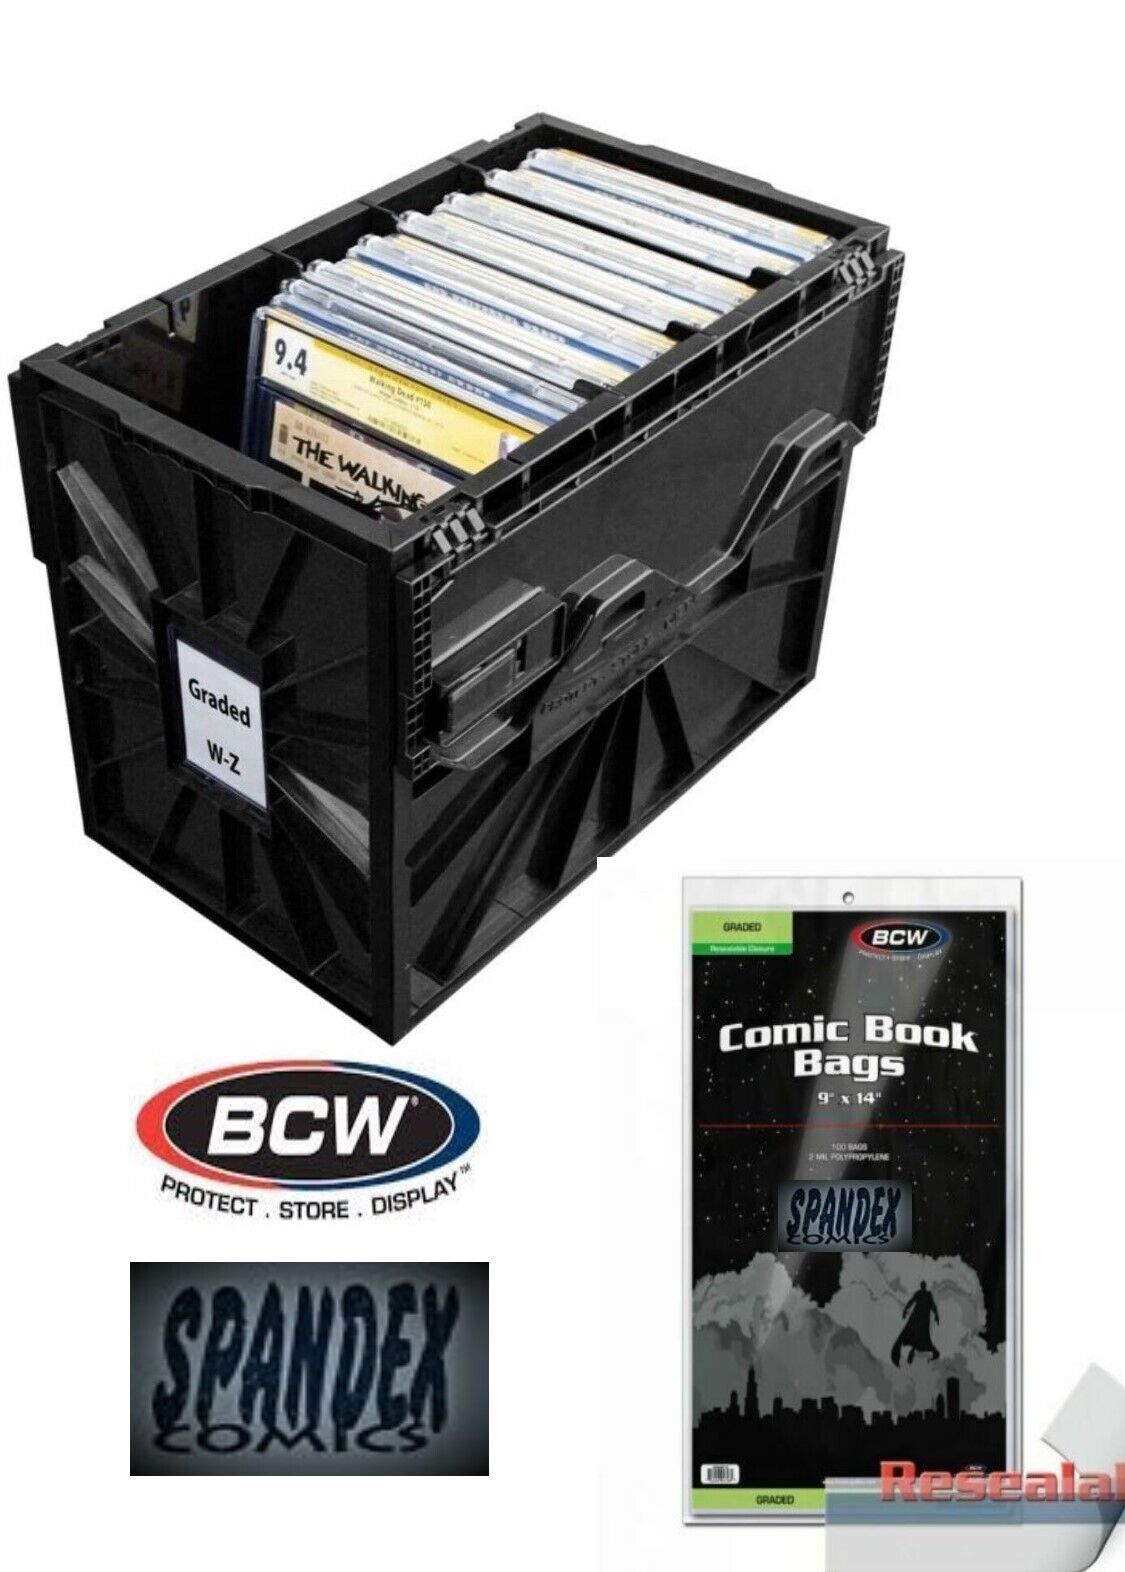 BCW Plastic CGC Graded Comic AcidFree Storage Bin + 100 BCW Resealable CGC bags